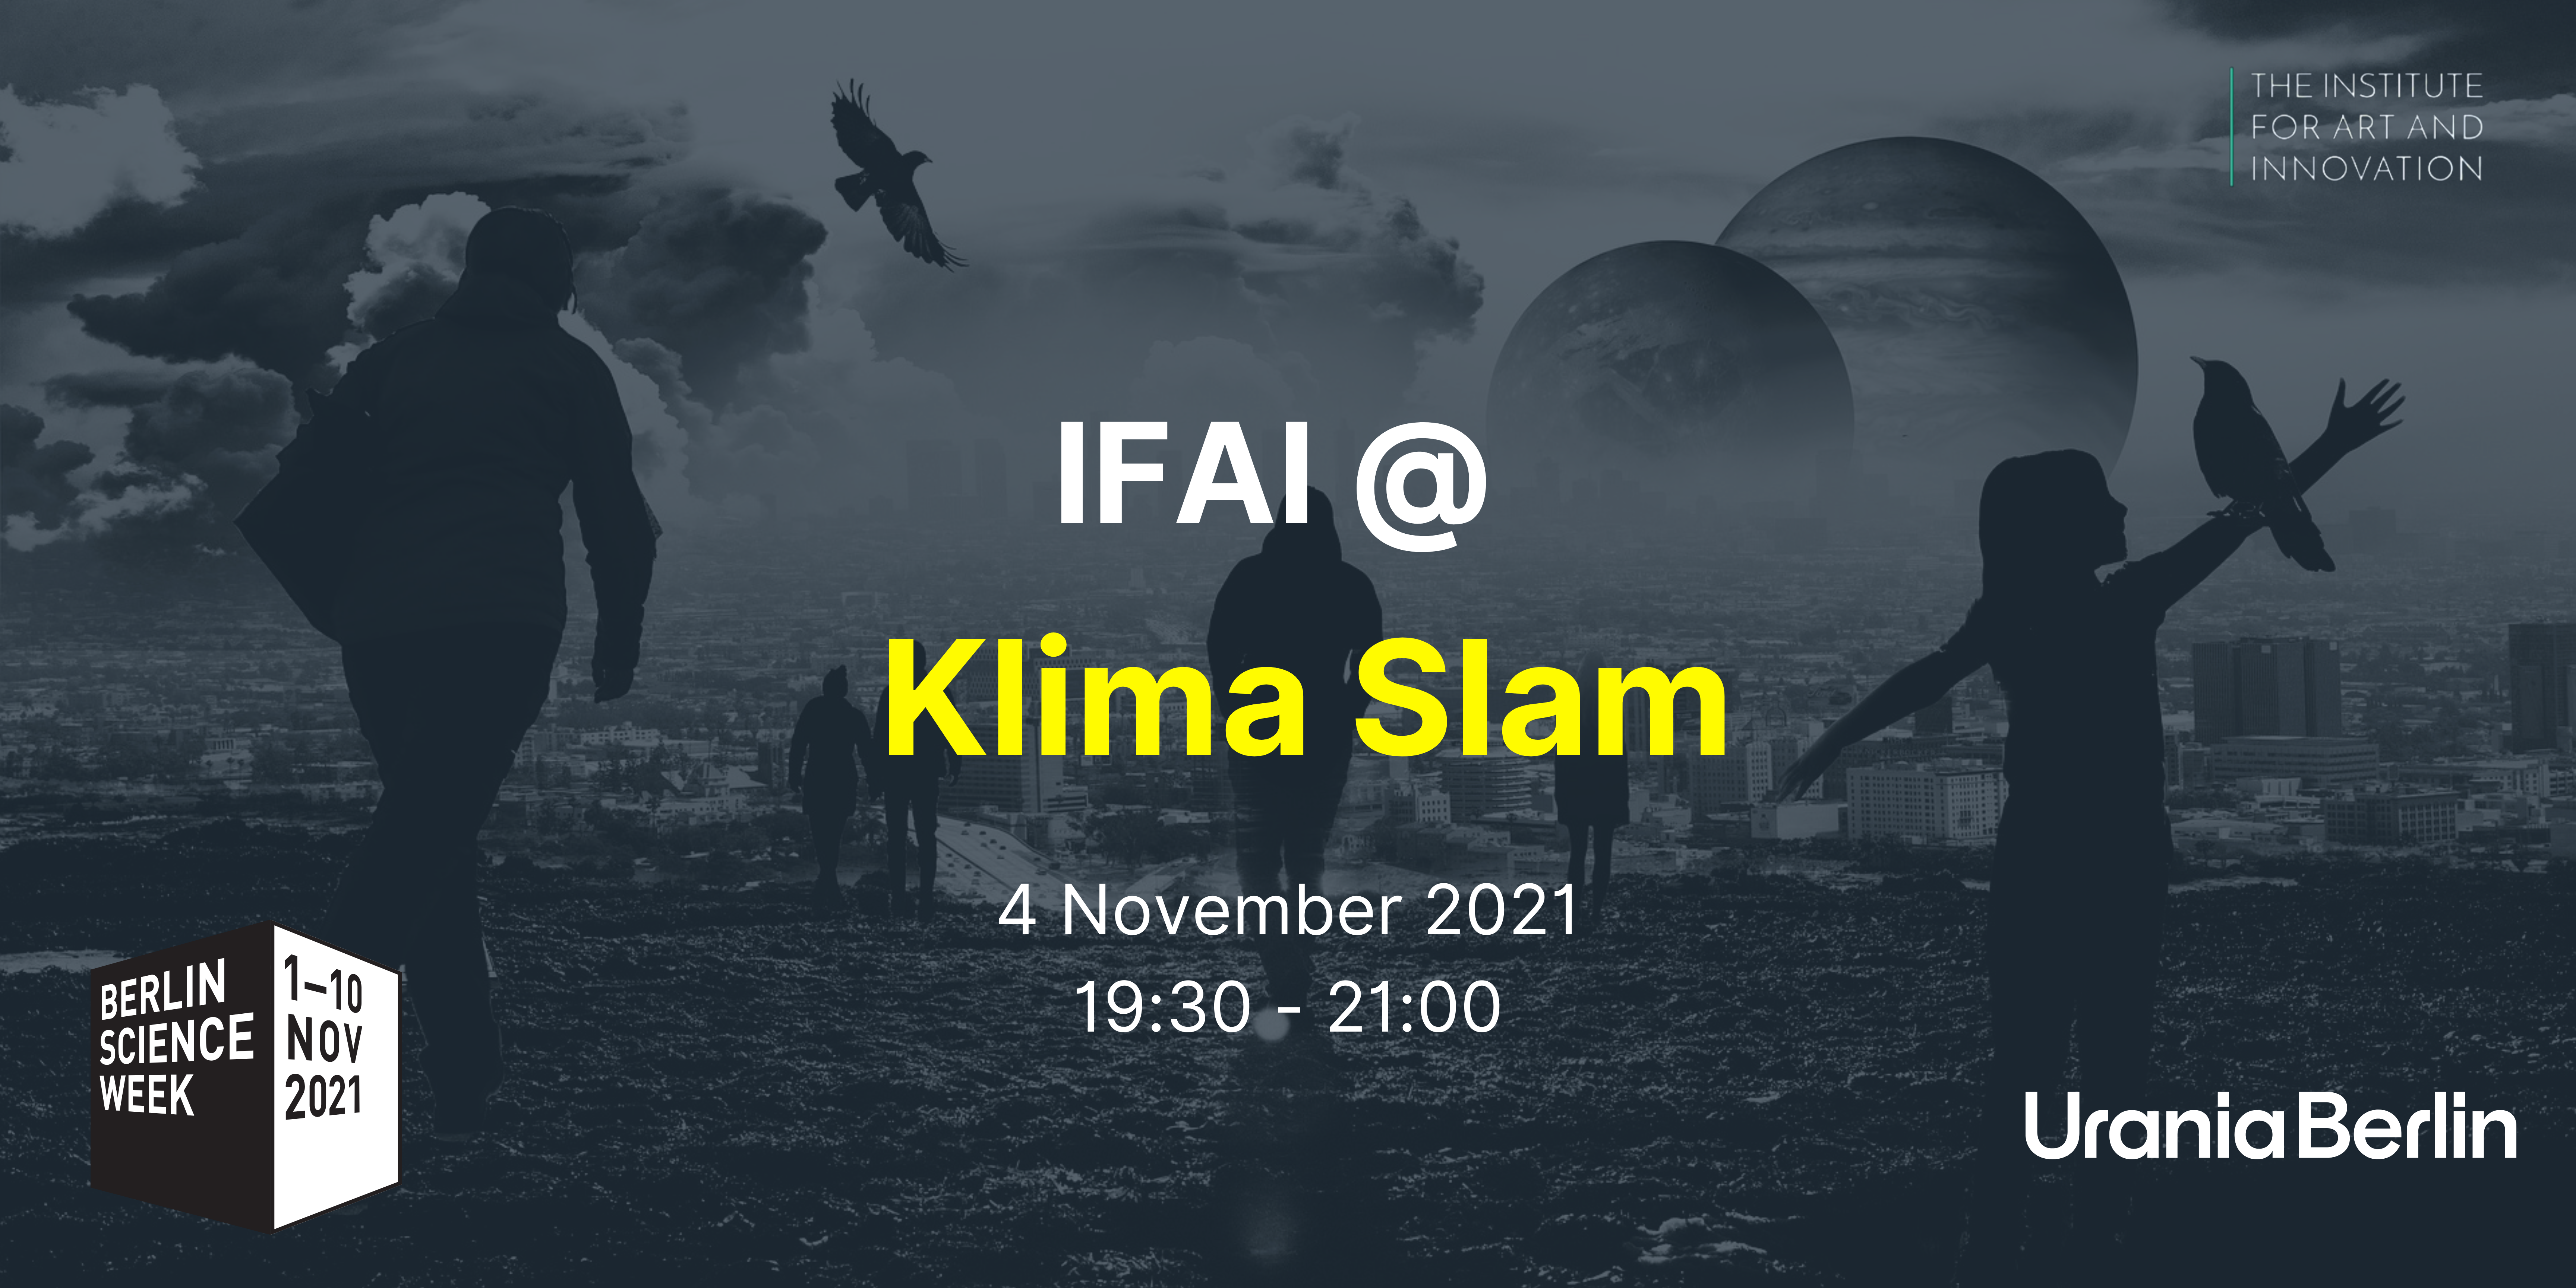 IFAI @Klima Slam